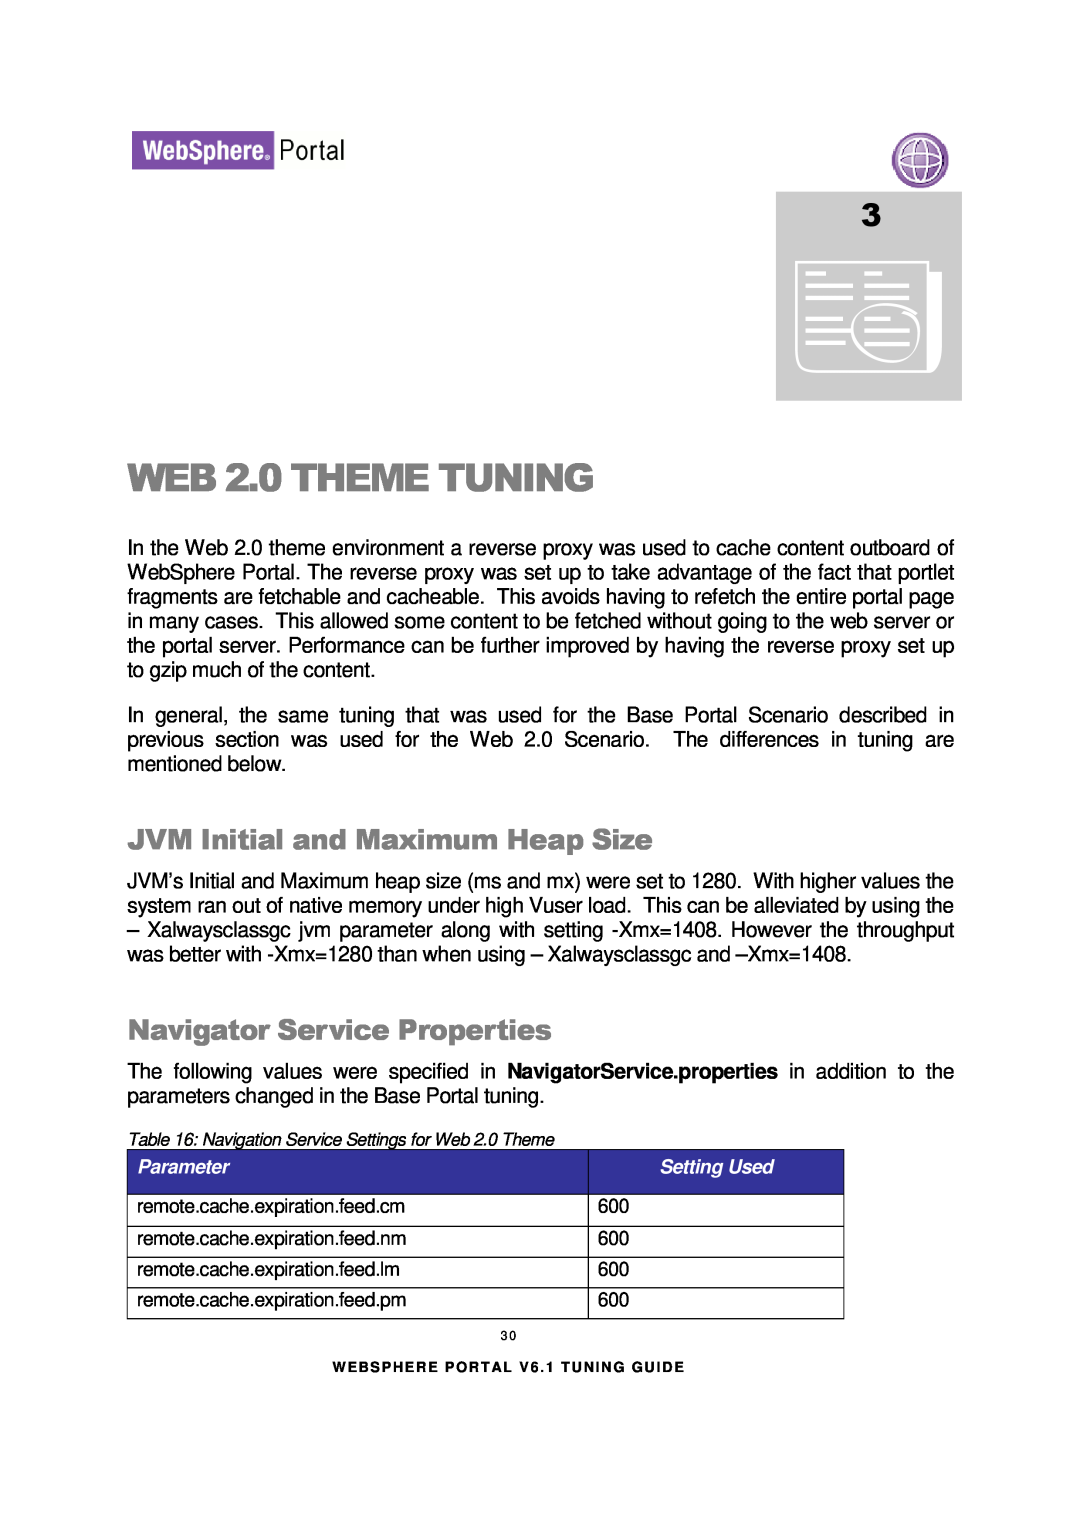 IBM 6.1.X manual WEB 2.0 THEME TUNING, JVM Initial and Maximum Heap Size, Navigator Service Properties 